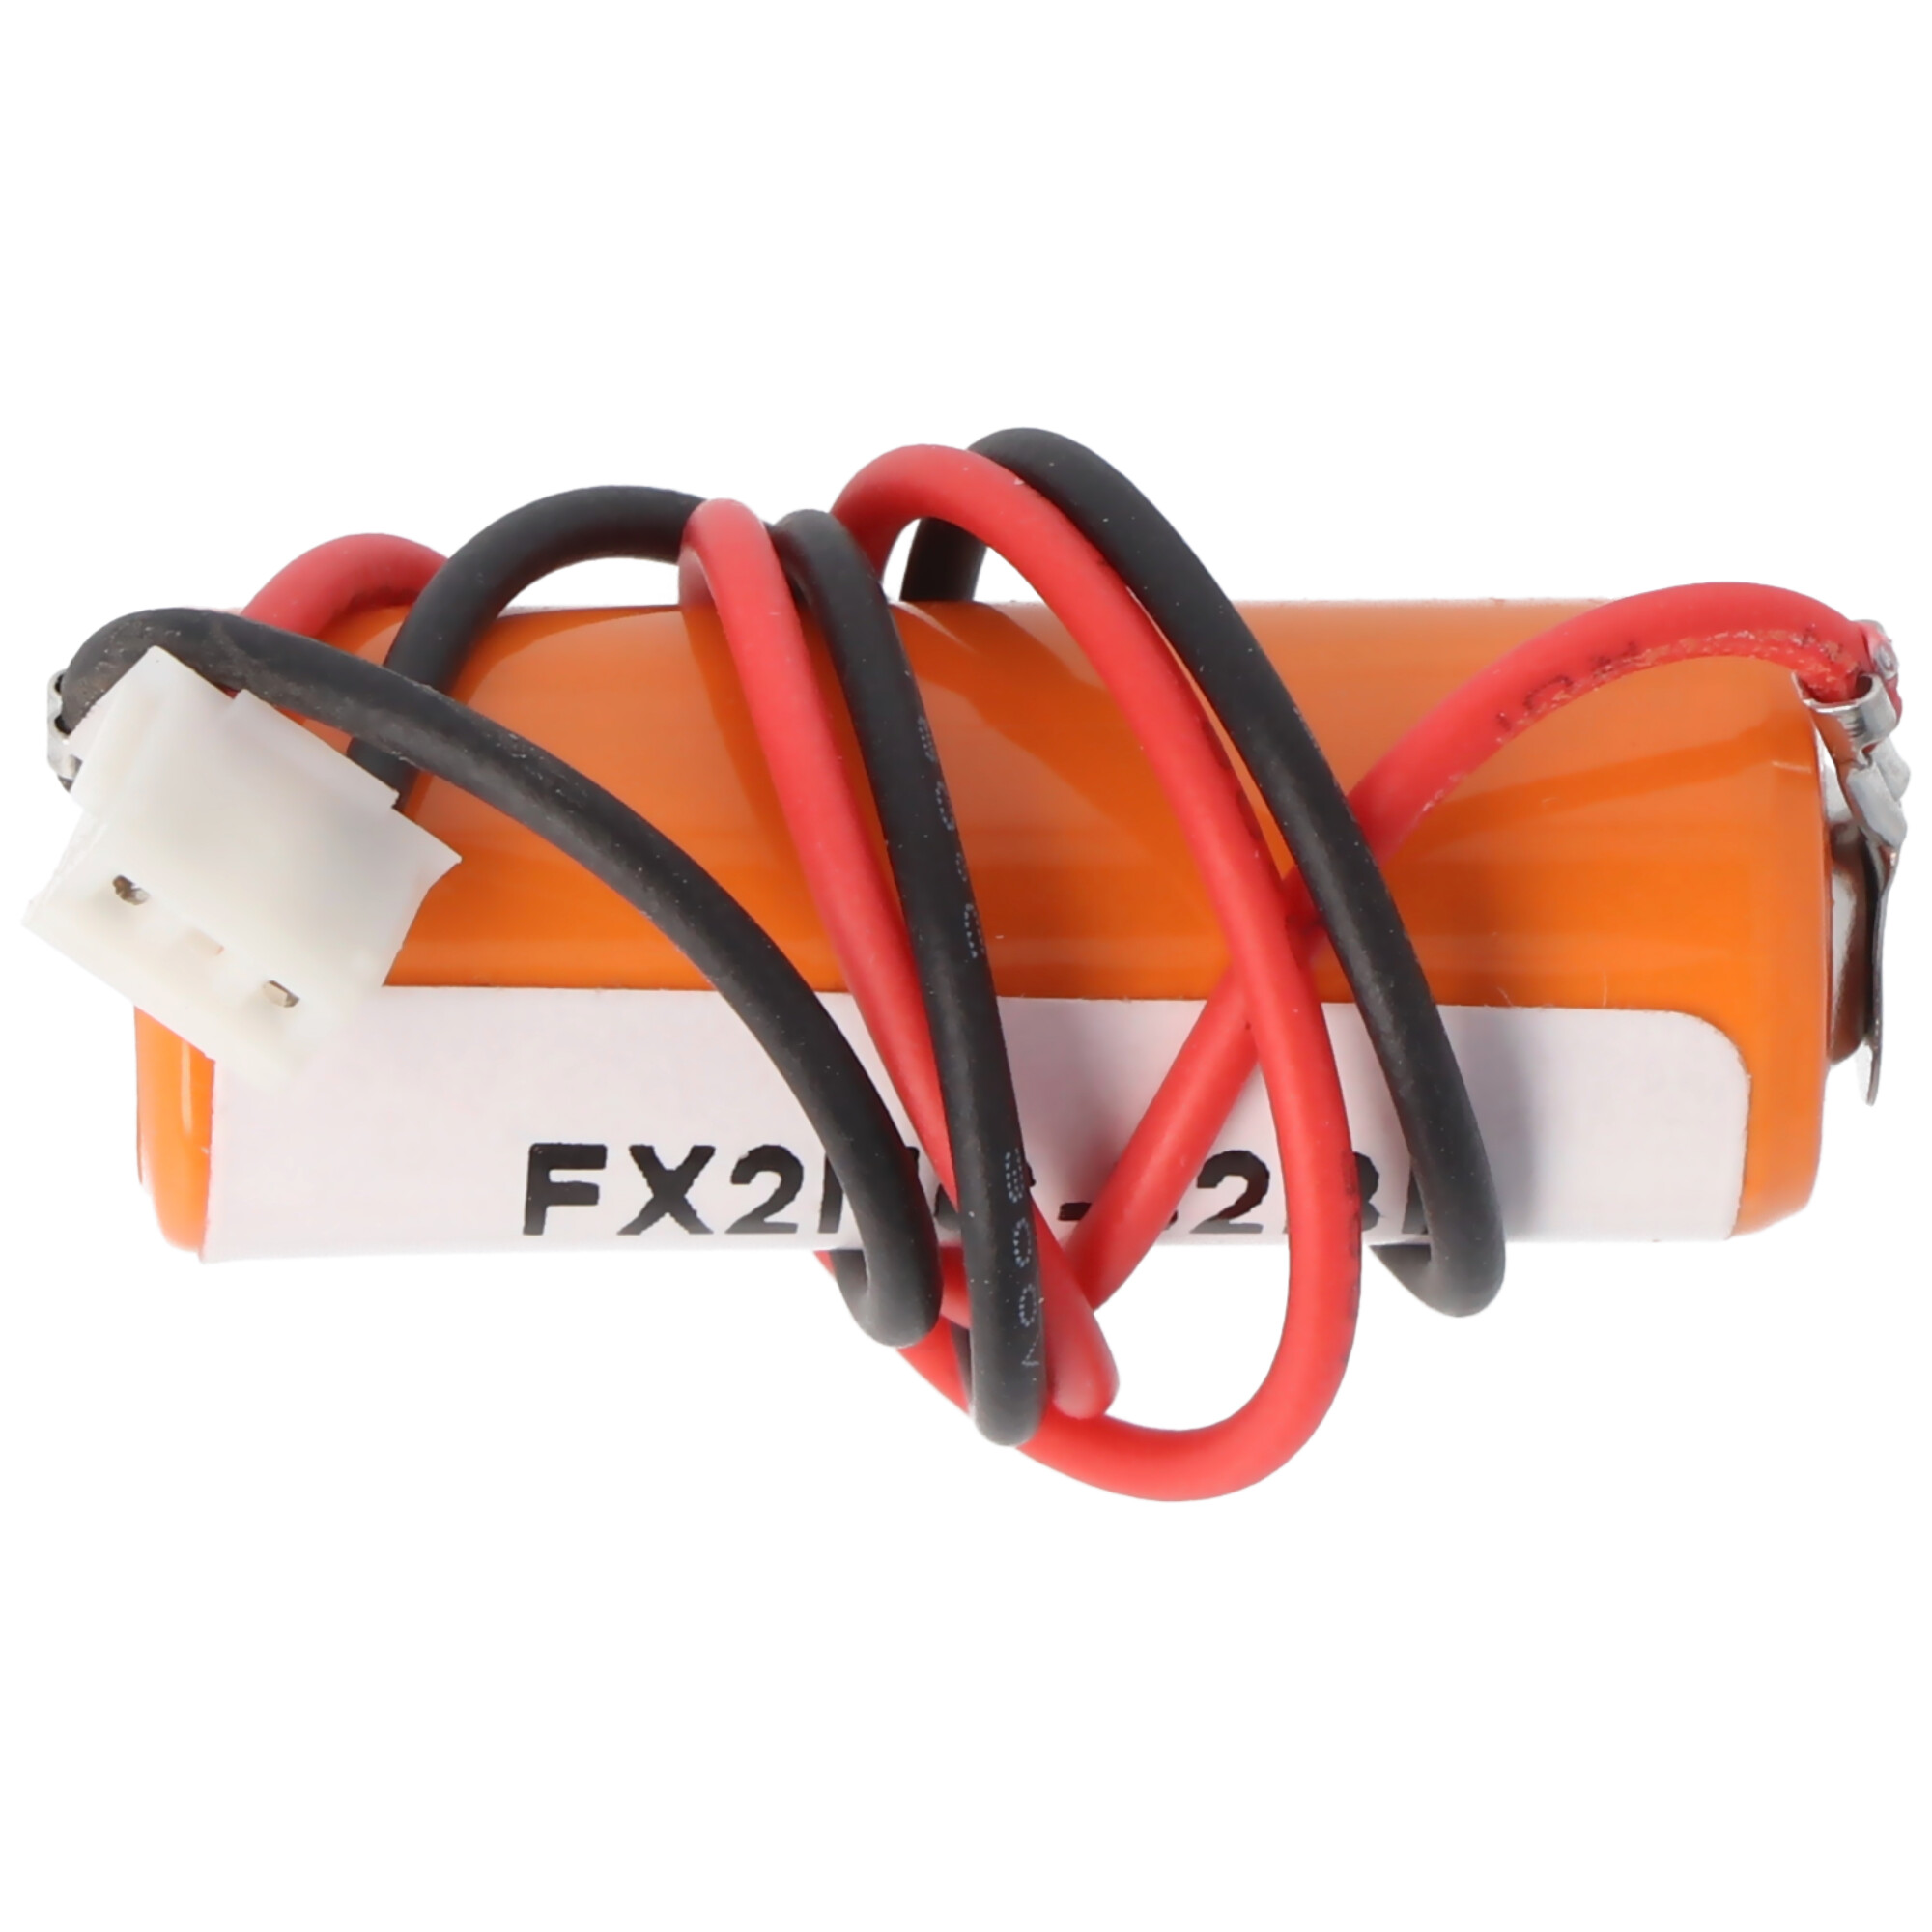 Batterie passend für Mitsubishi FX2NC series controllers, Lithium Batterie FX2NC-32BL ER10280